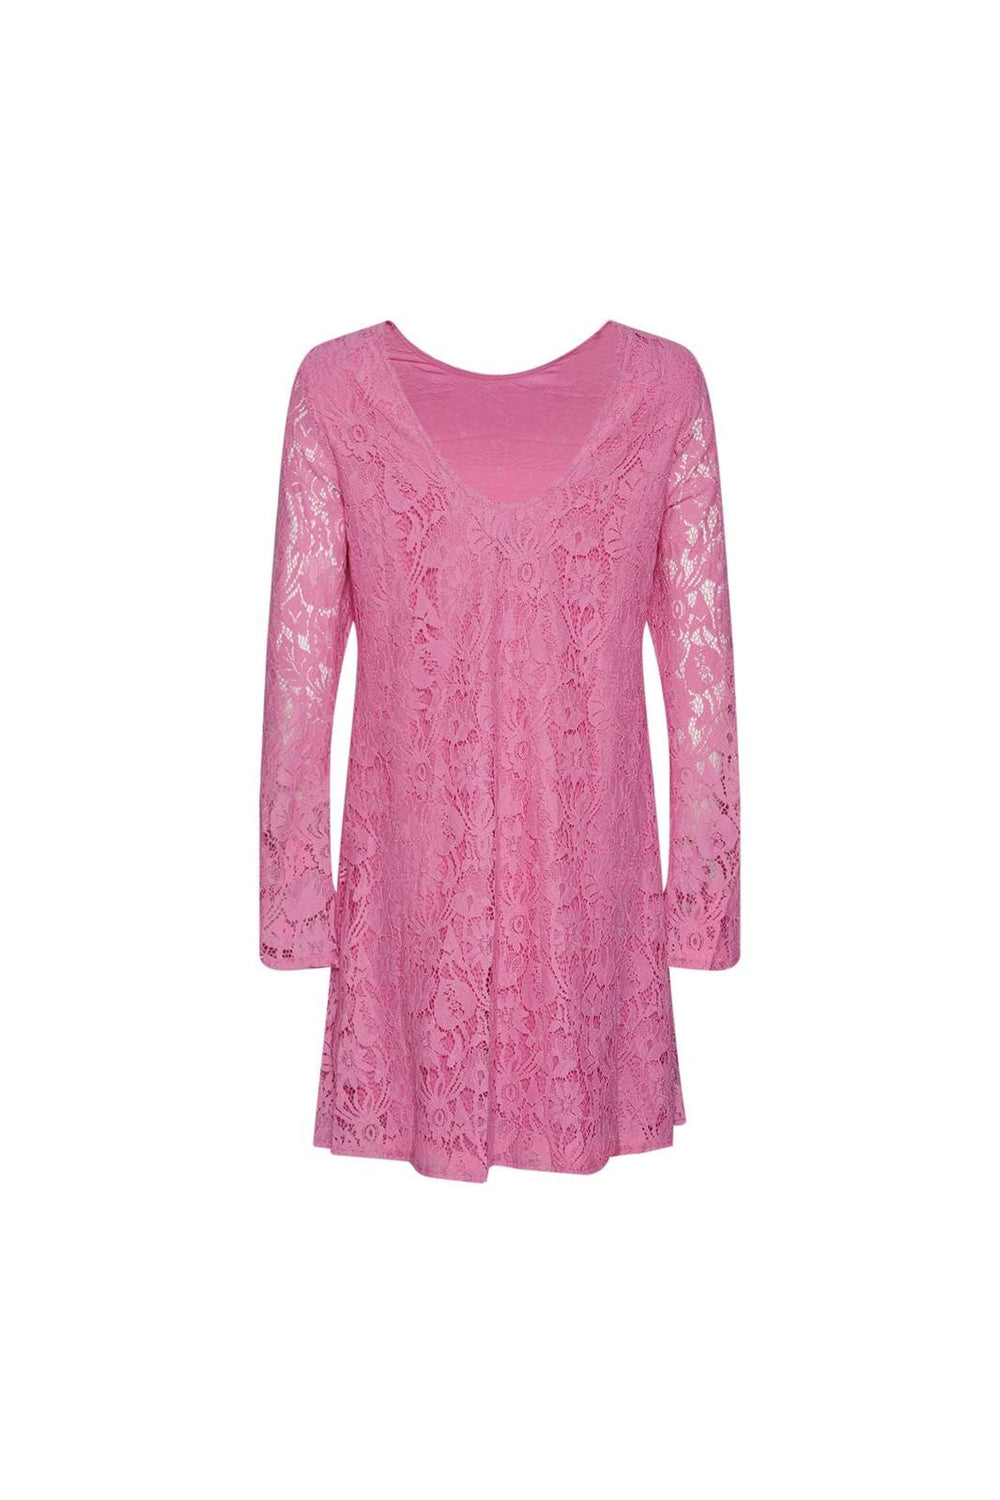 Noella - Mira Scoop Dress - 683 Candy Pink